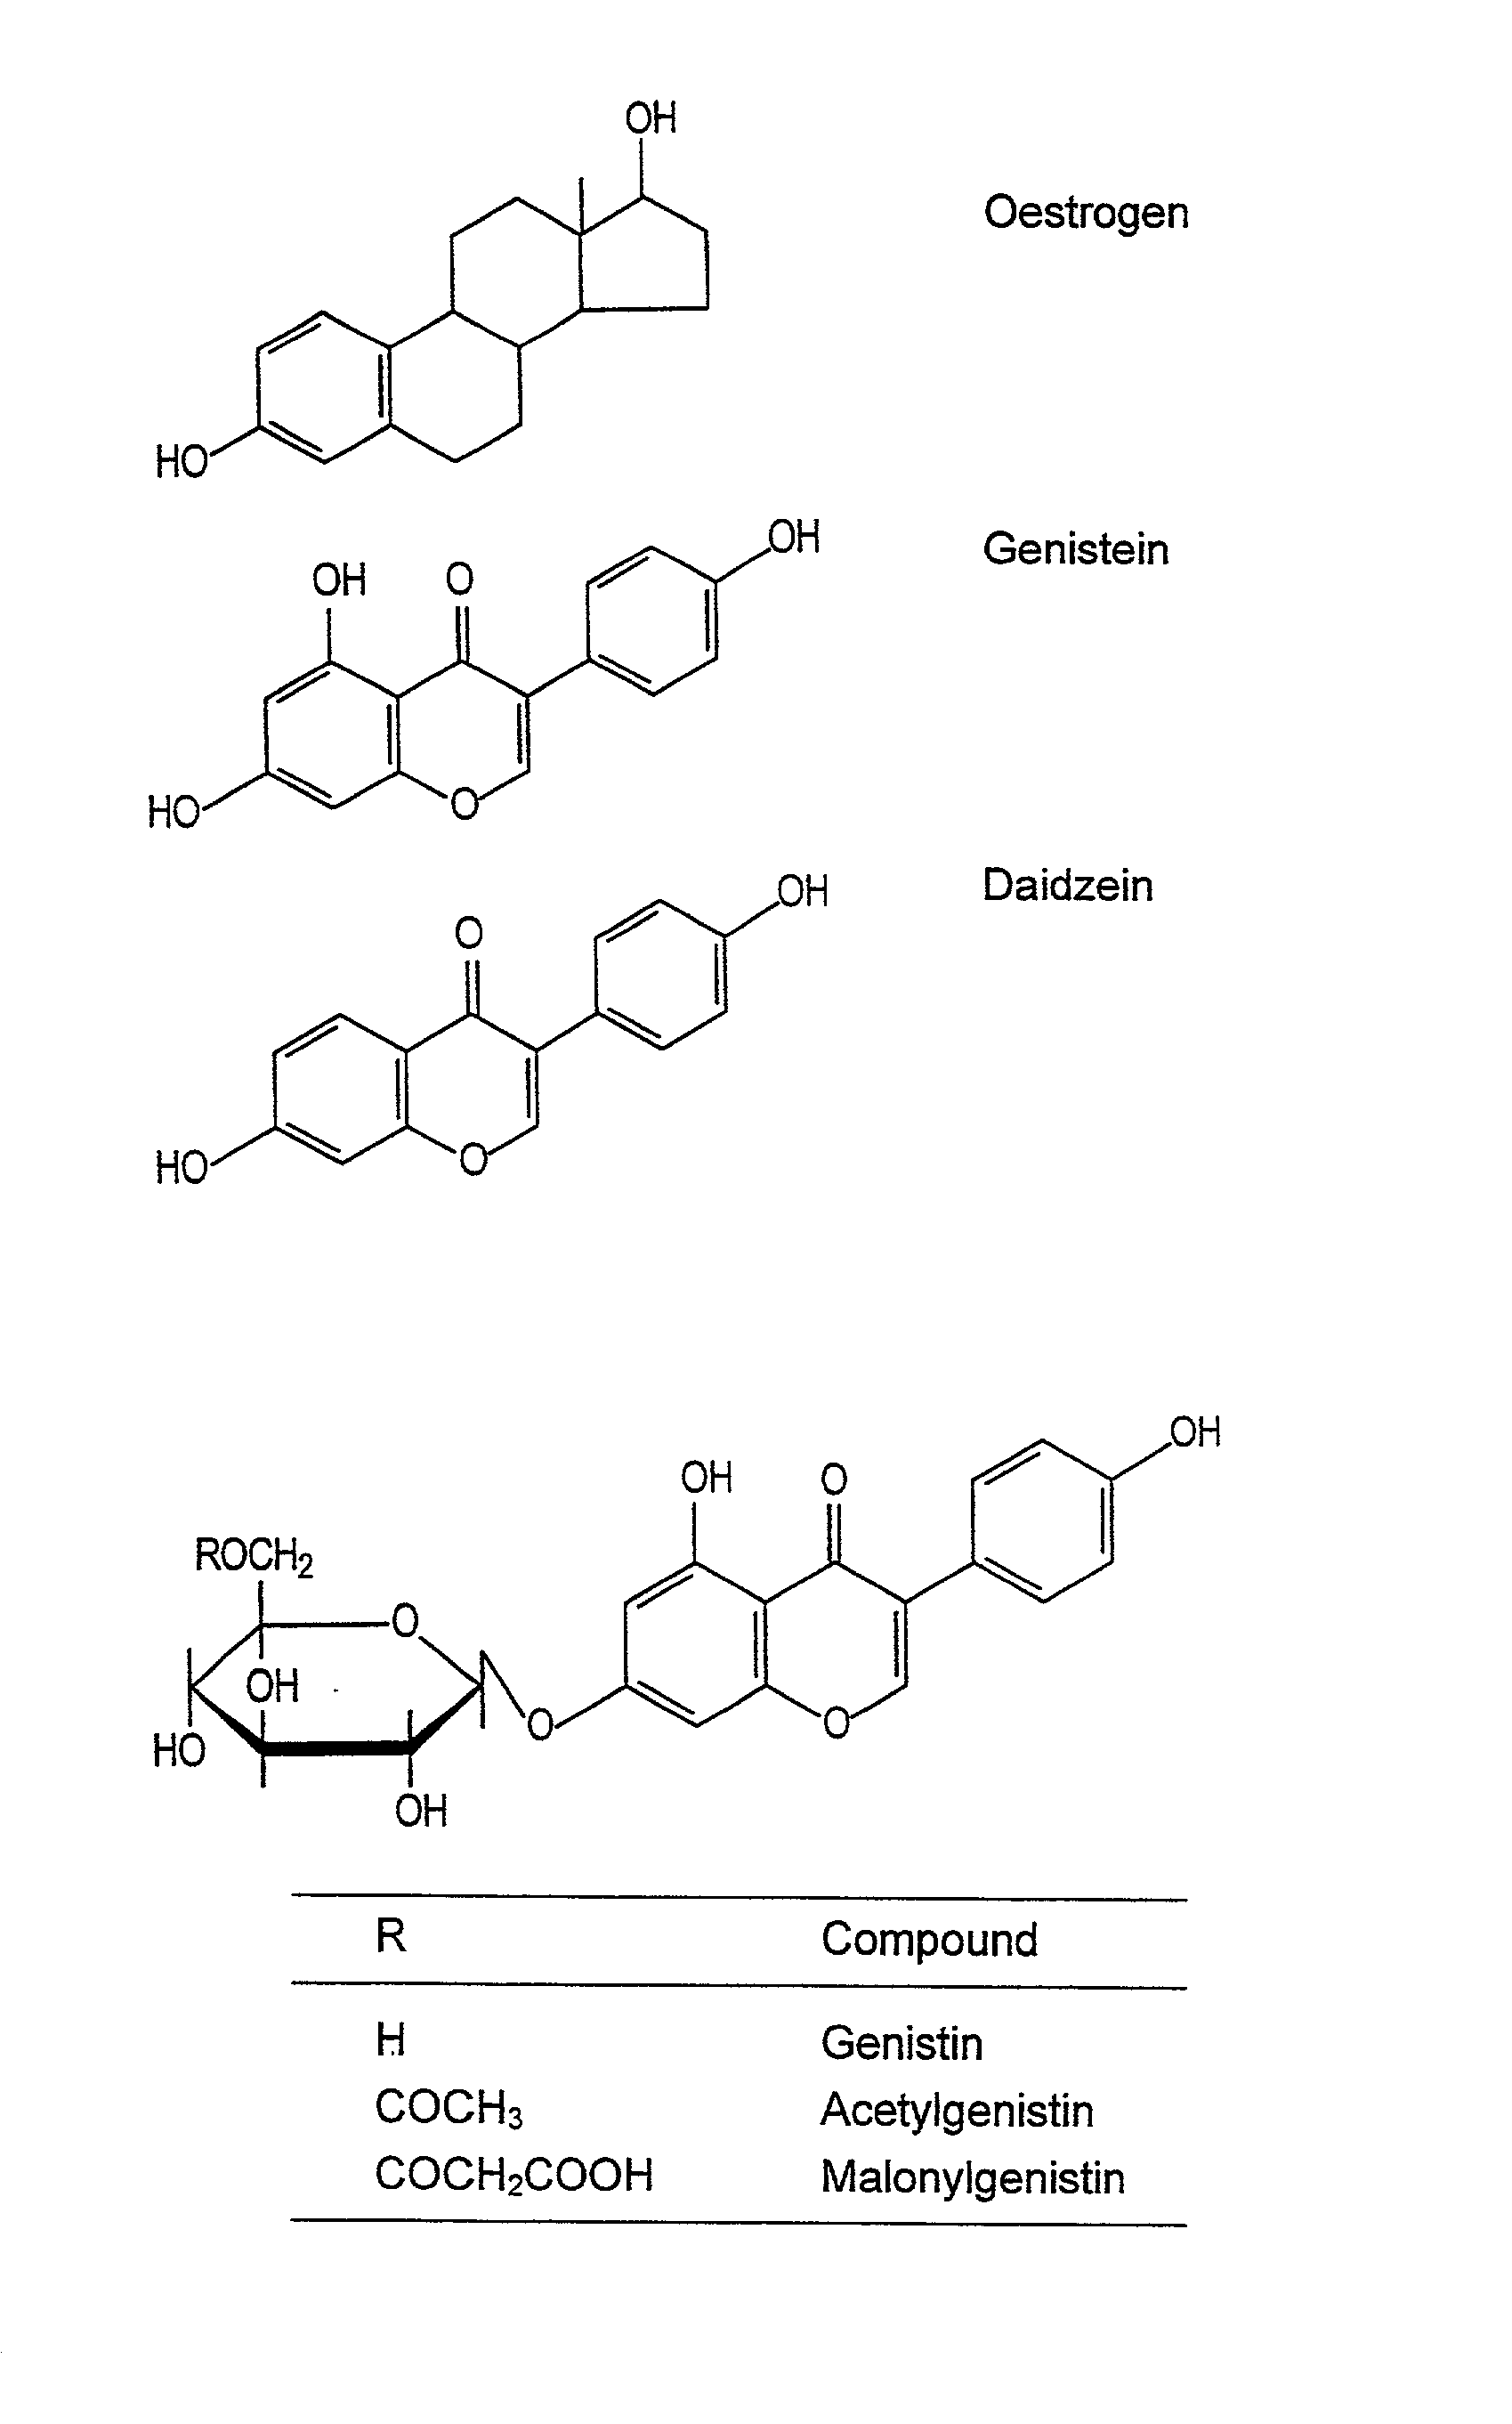 Cosmetics containing isoflavone aglycones